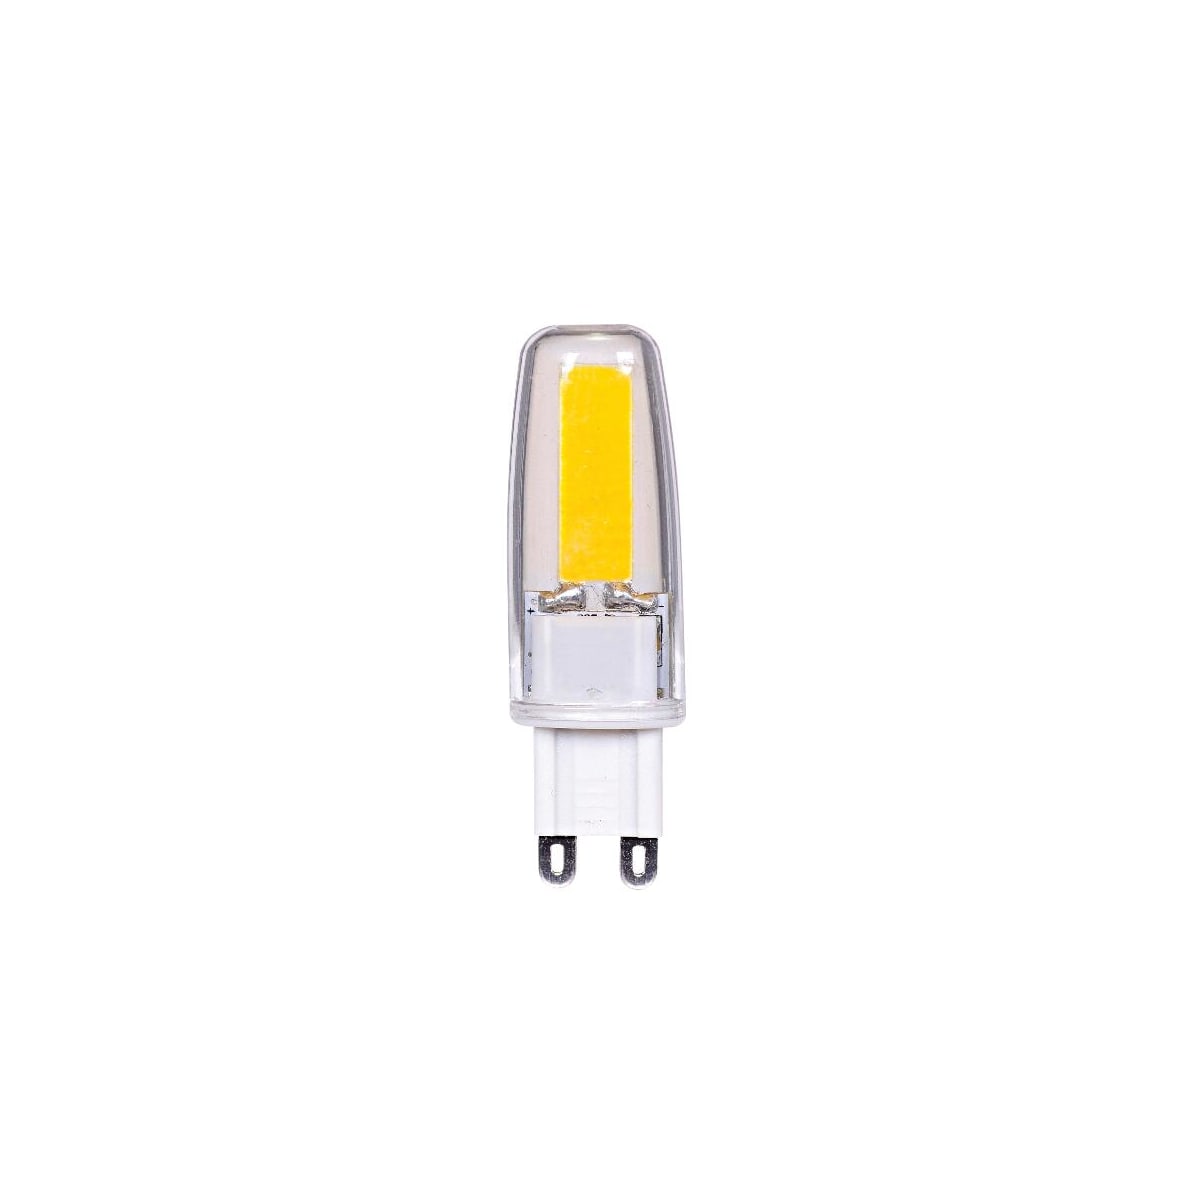 Premisse vlam Inactief Satco Lighting S29547 Clear Single 4 Watt Dimmable T4 G9 LED Bulb - 400  Lumens, 2700K, and 80CRI - LightingShowplace.com